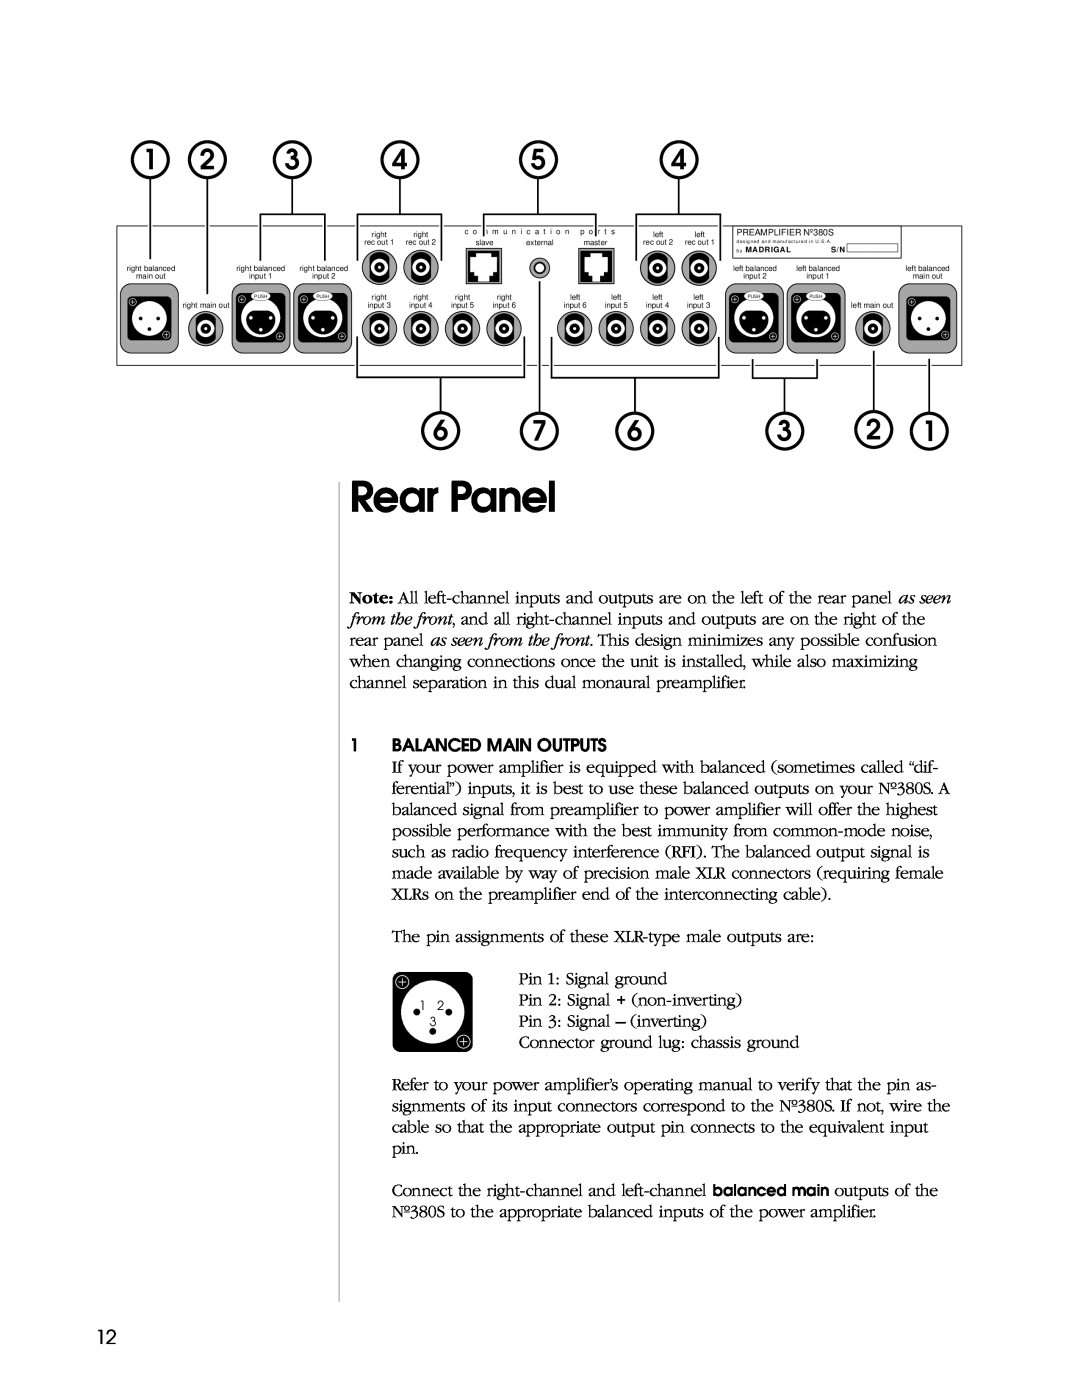 Madrigal Imaging N380S owner manual Rear Panel 